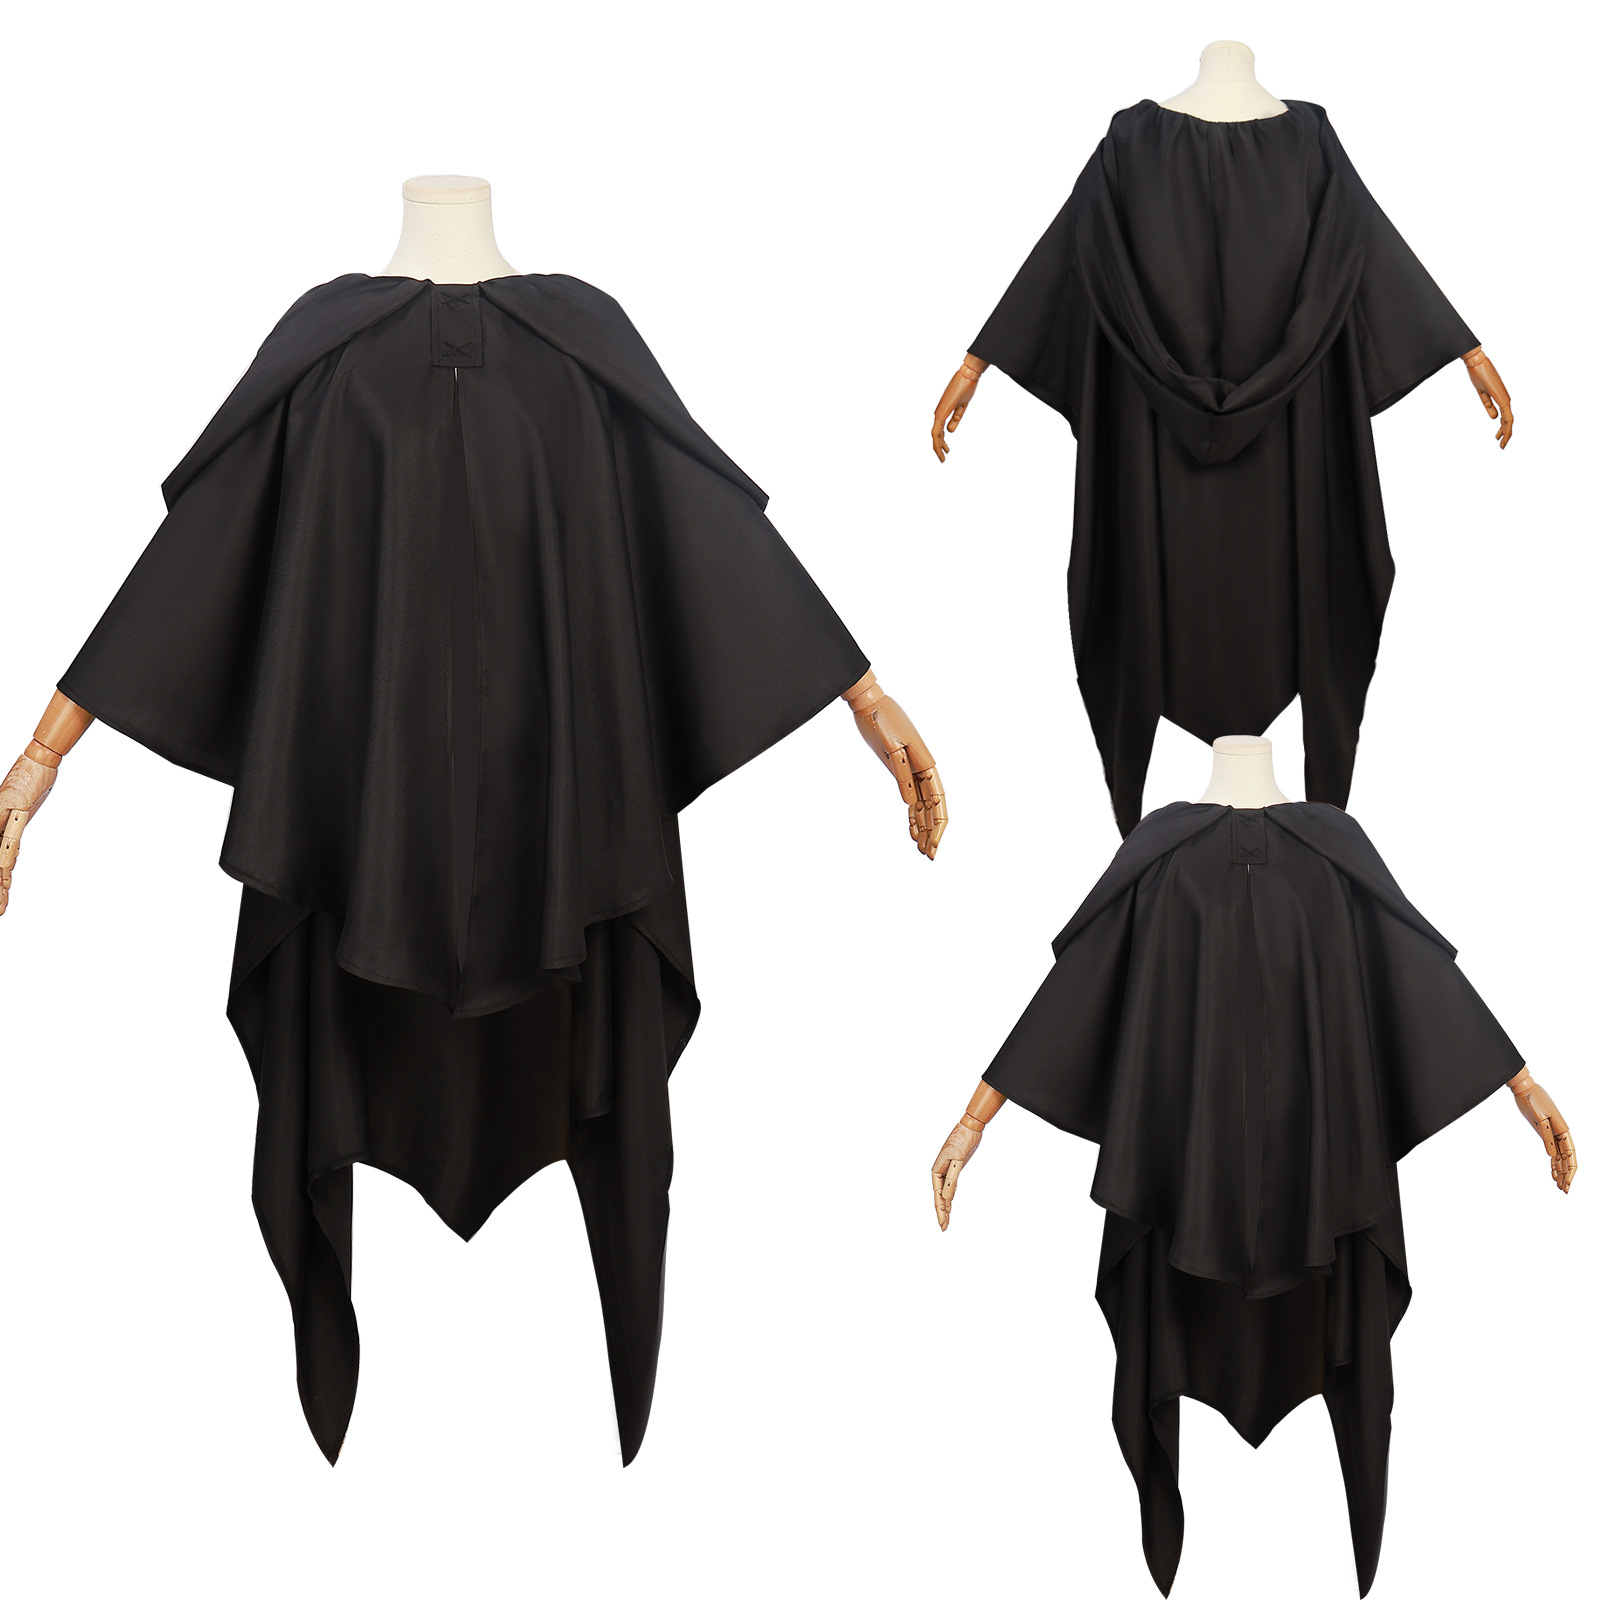 Medieval Renaissance bat sleeve hooded cloak cosplay cloak performance costume